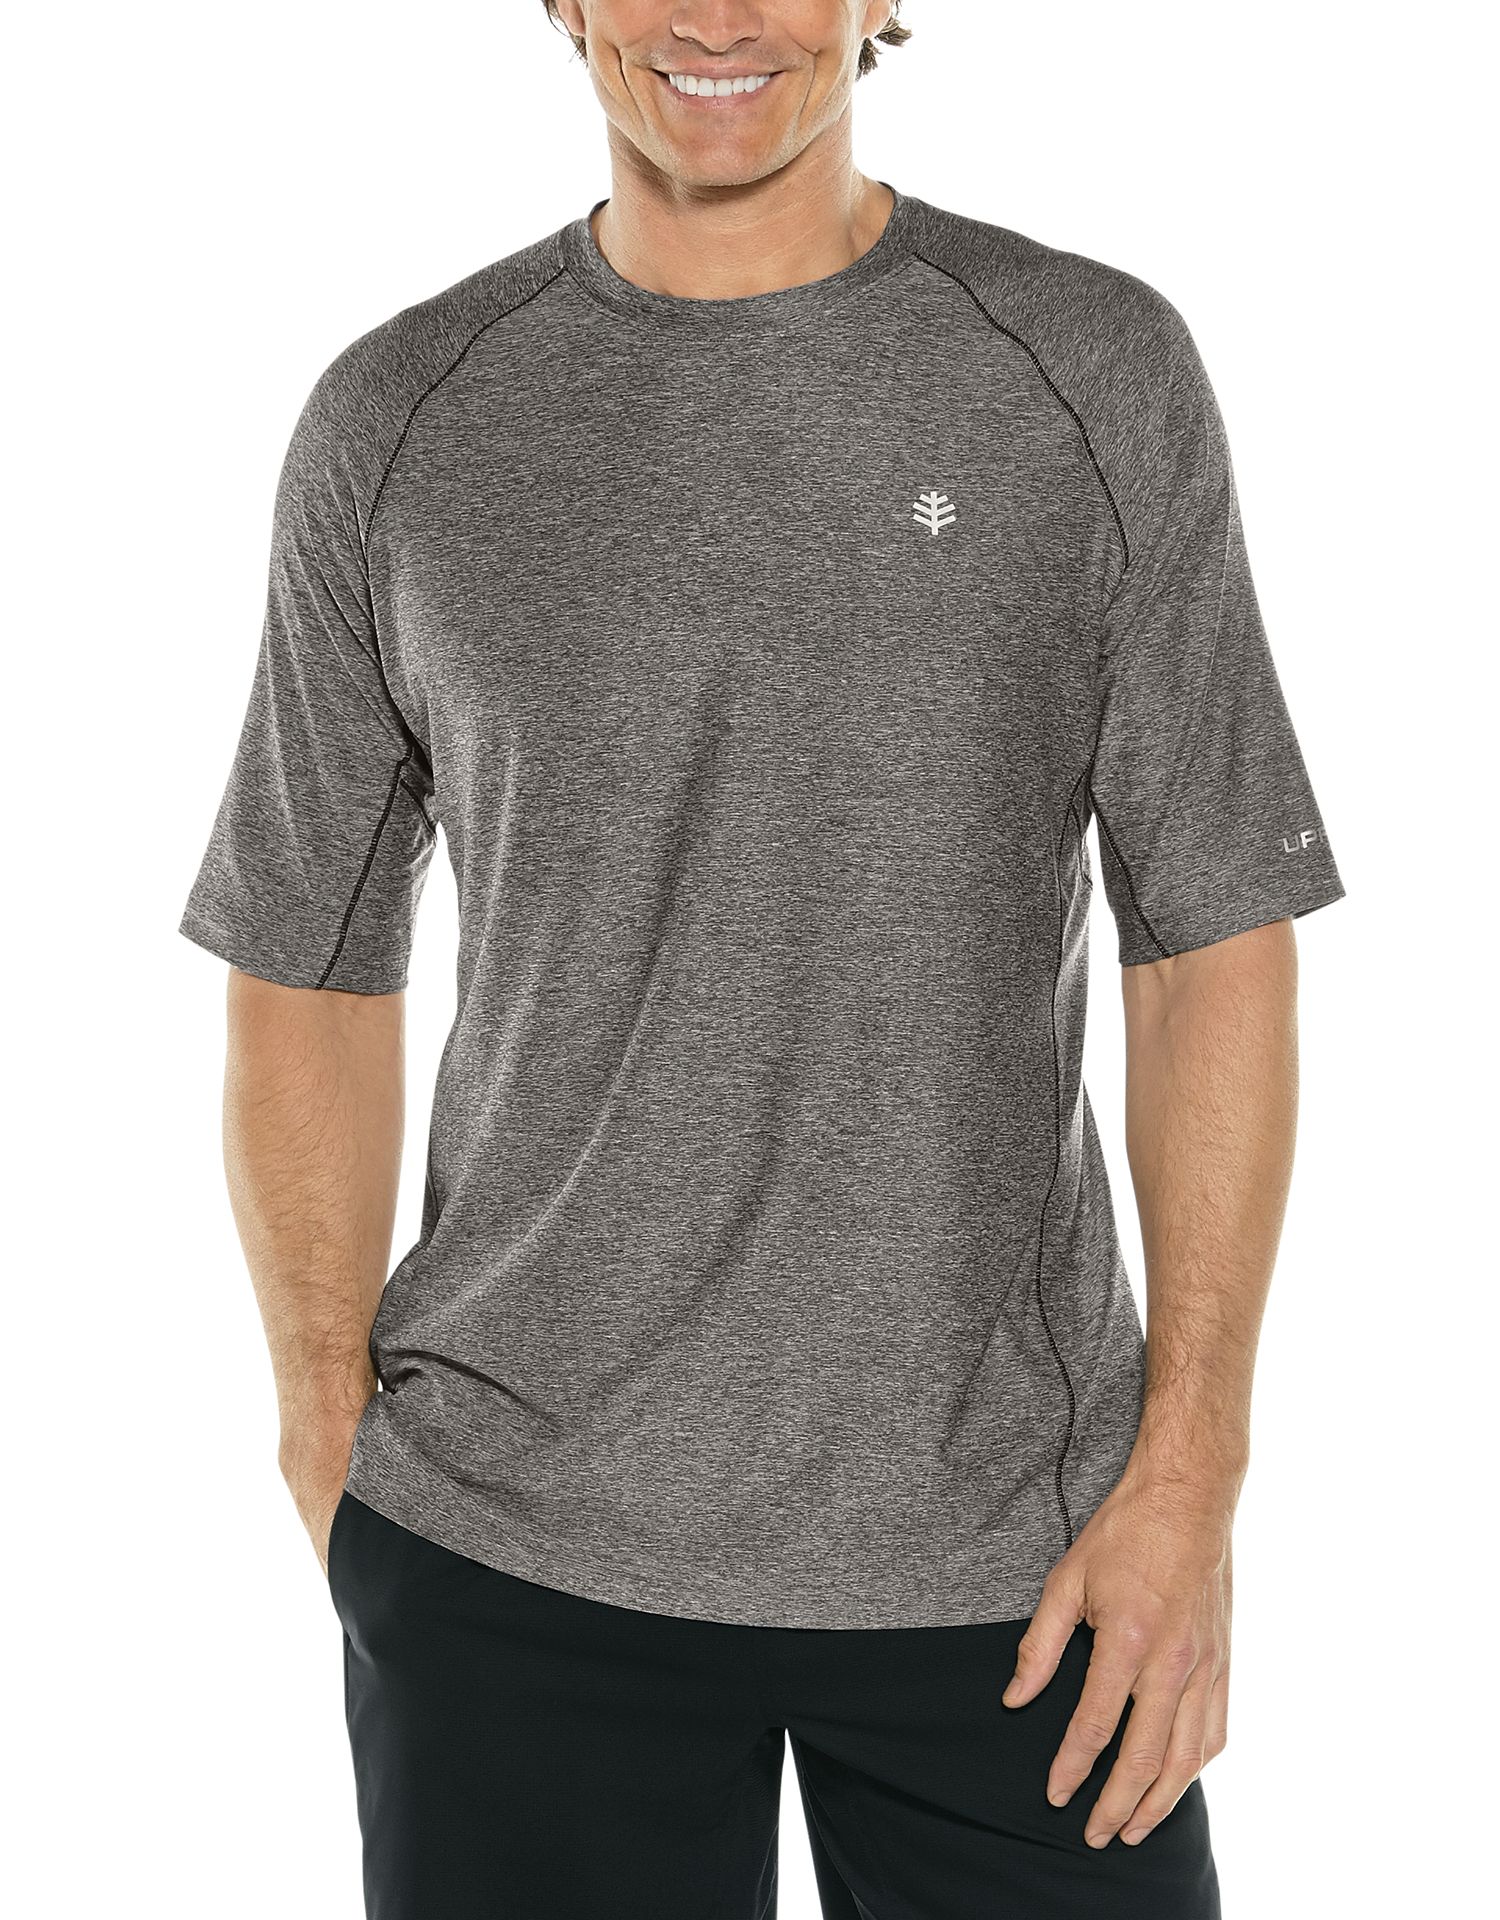 Coolibar - UV Sports Shirt for men - Agility Performance - Charcoal